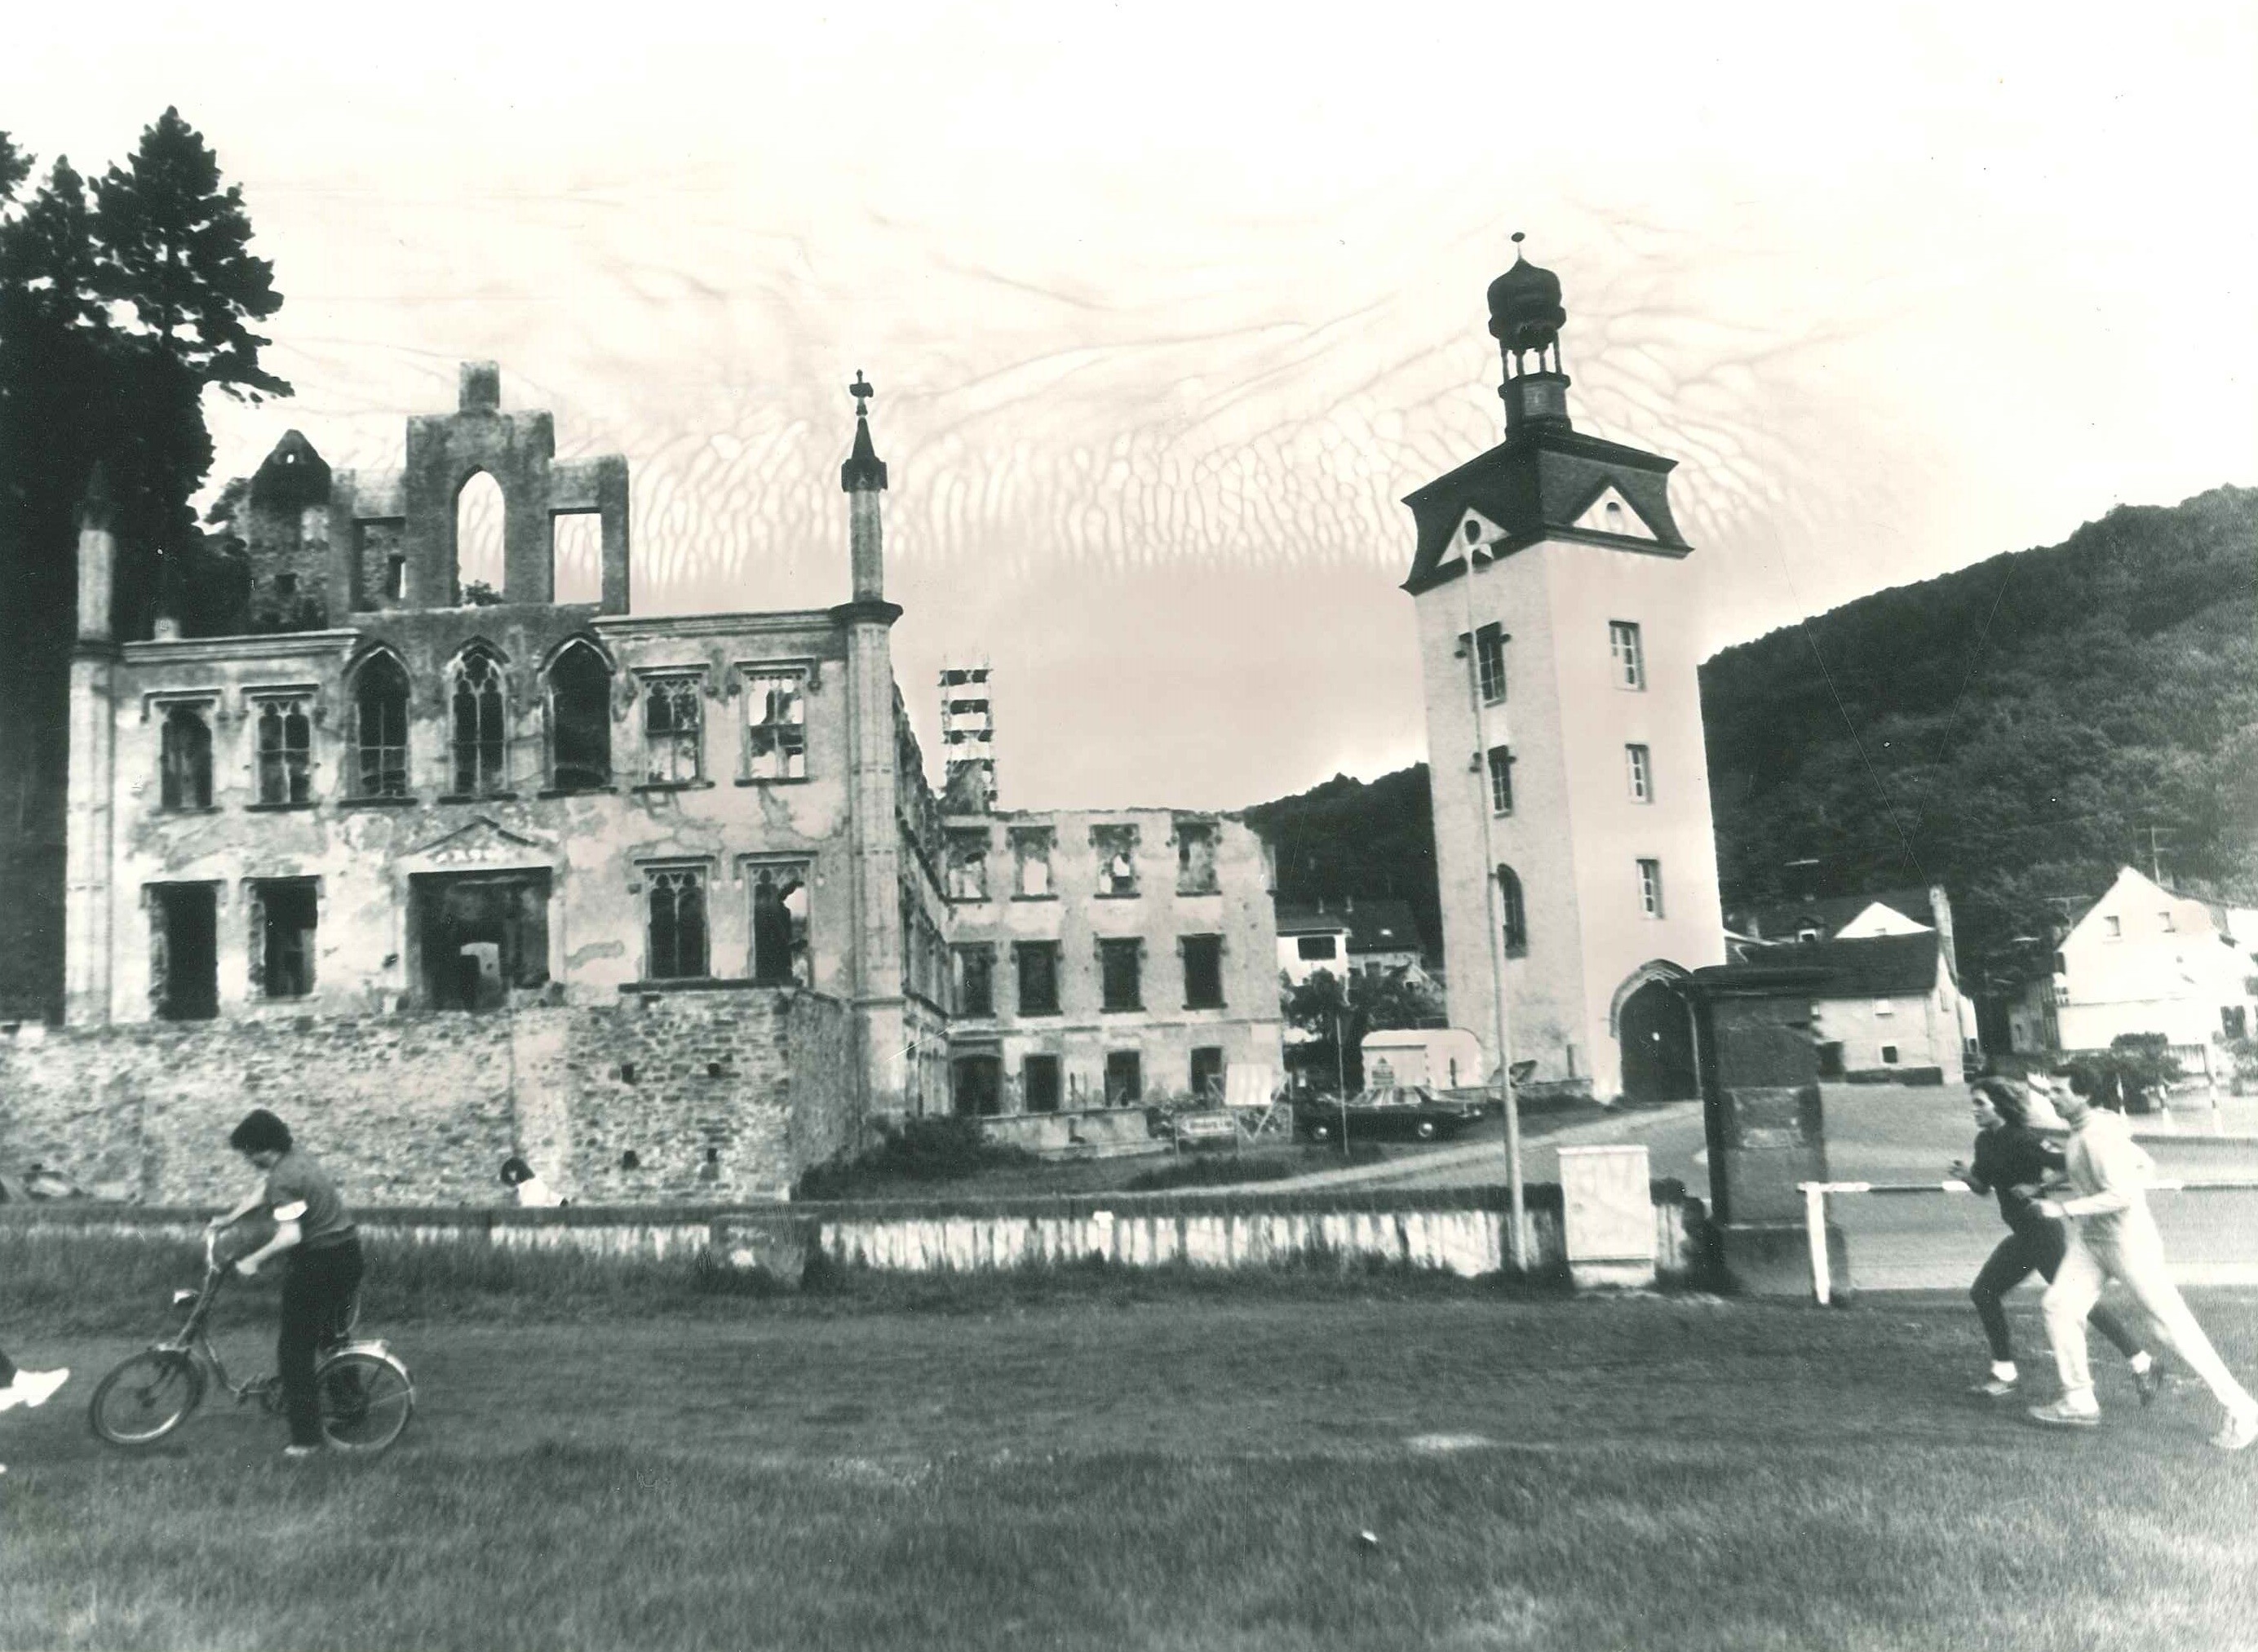 Ruine von Schloß Sayn, 1983 (REM CC BY-NC-SA)